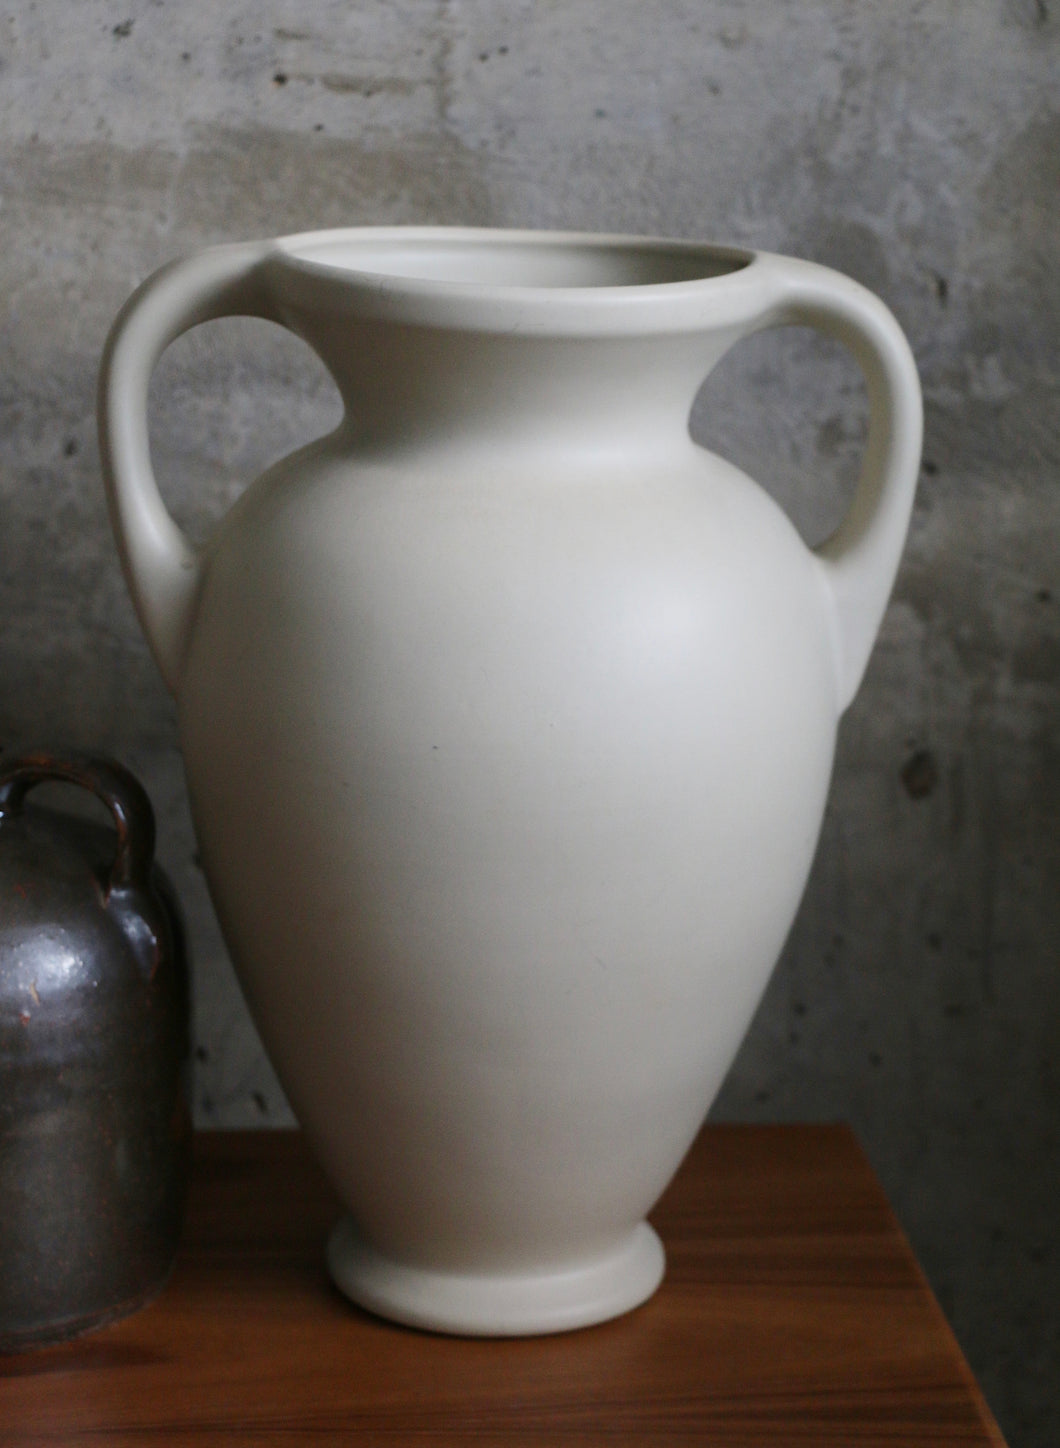 Heagar Ceramic  Vase